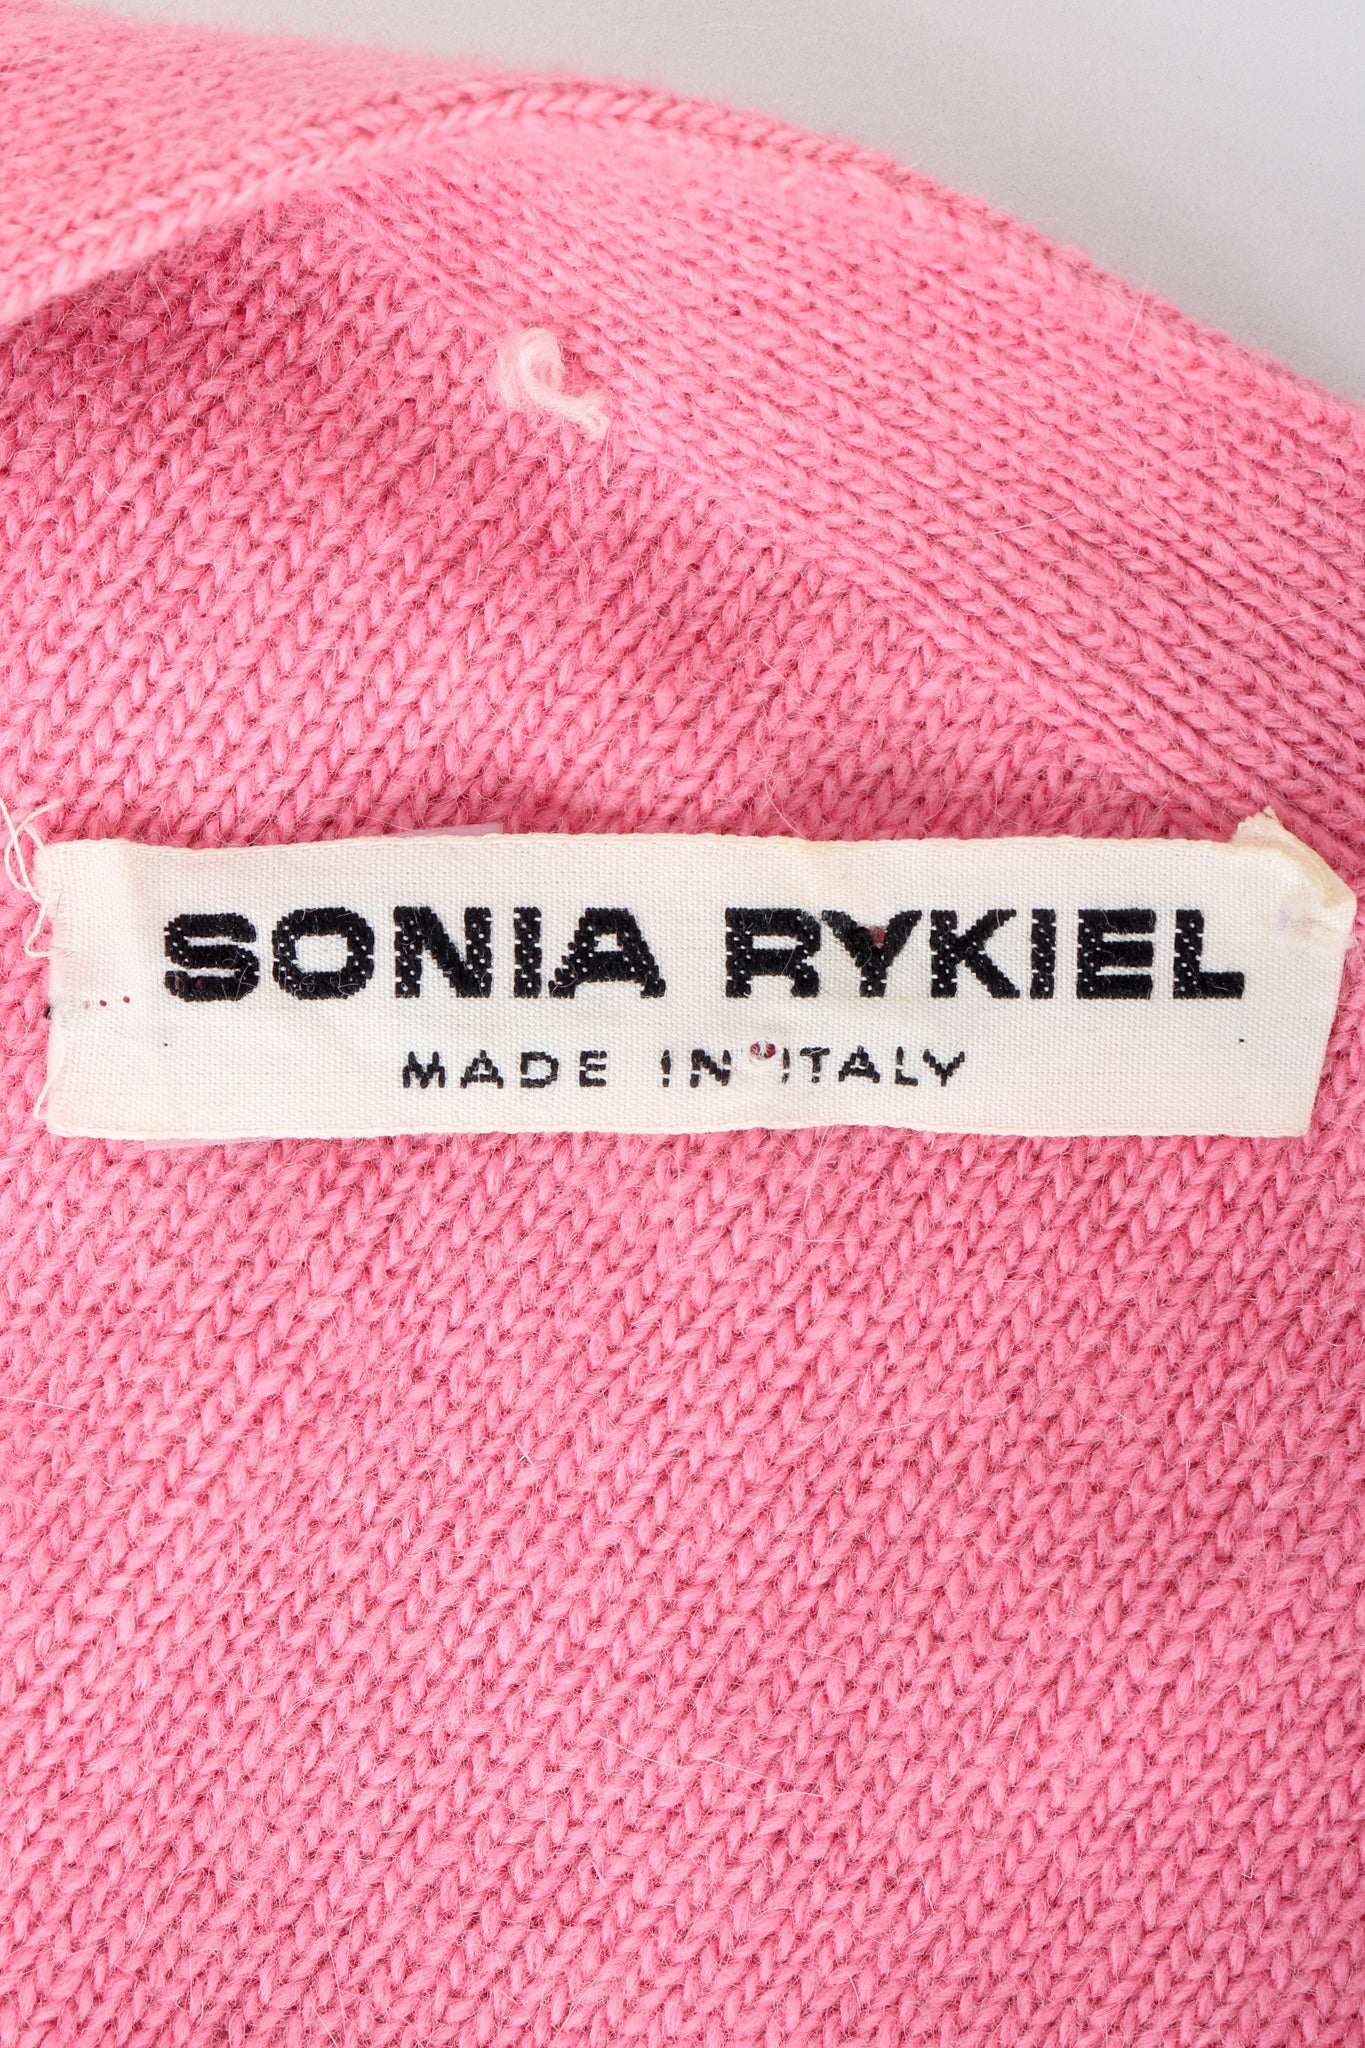 Vintage Sonia Rykiel label on pink fabric